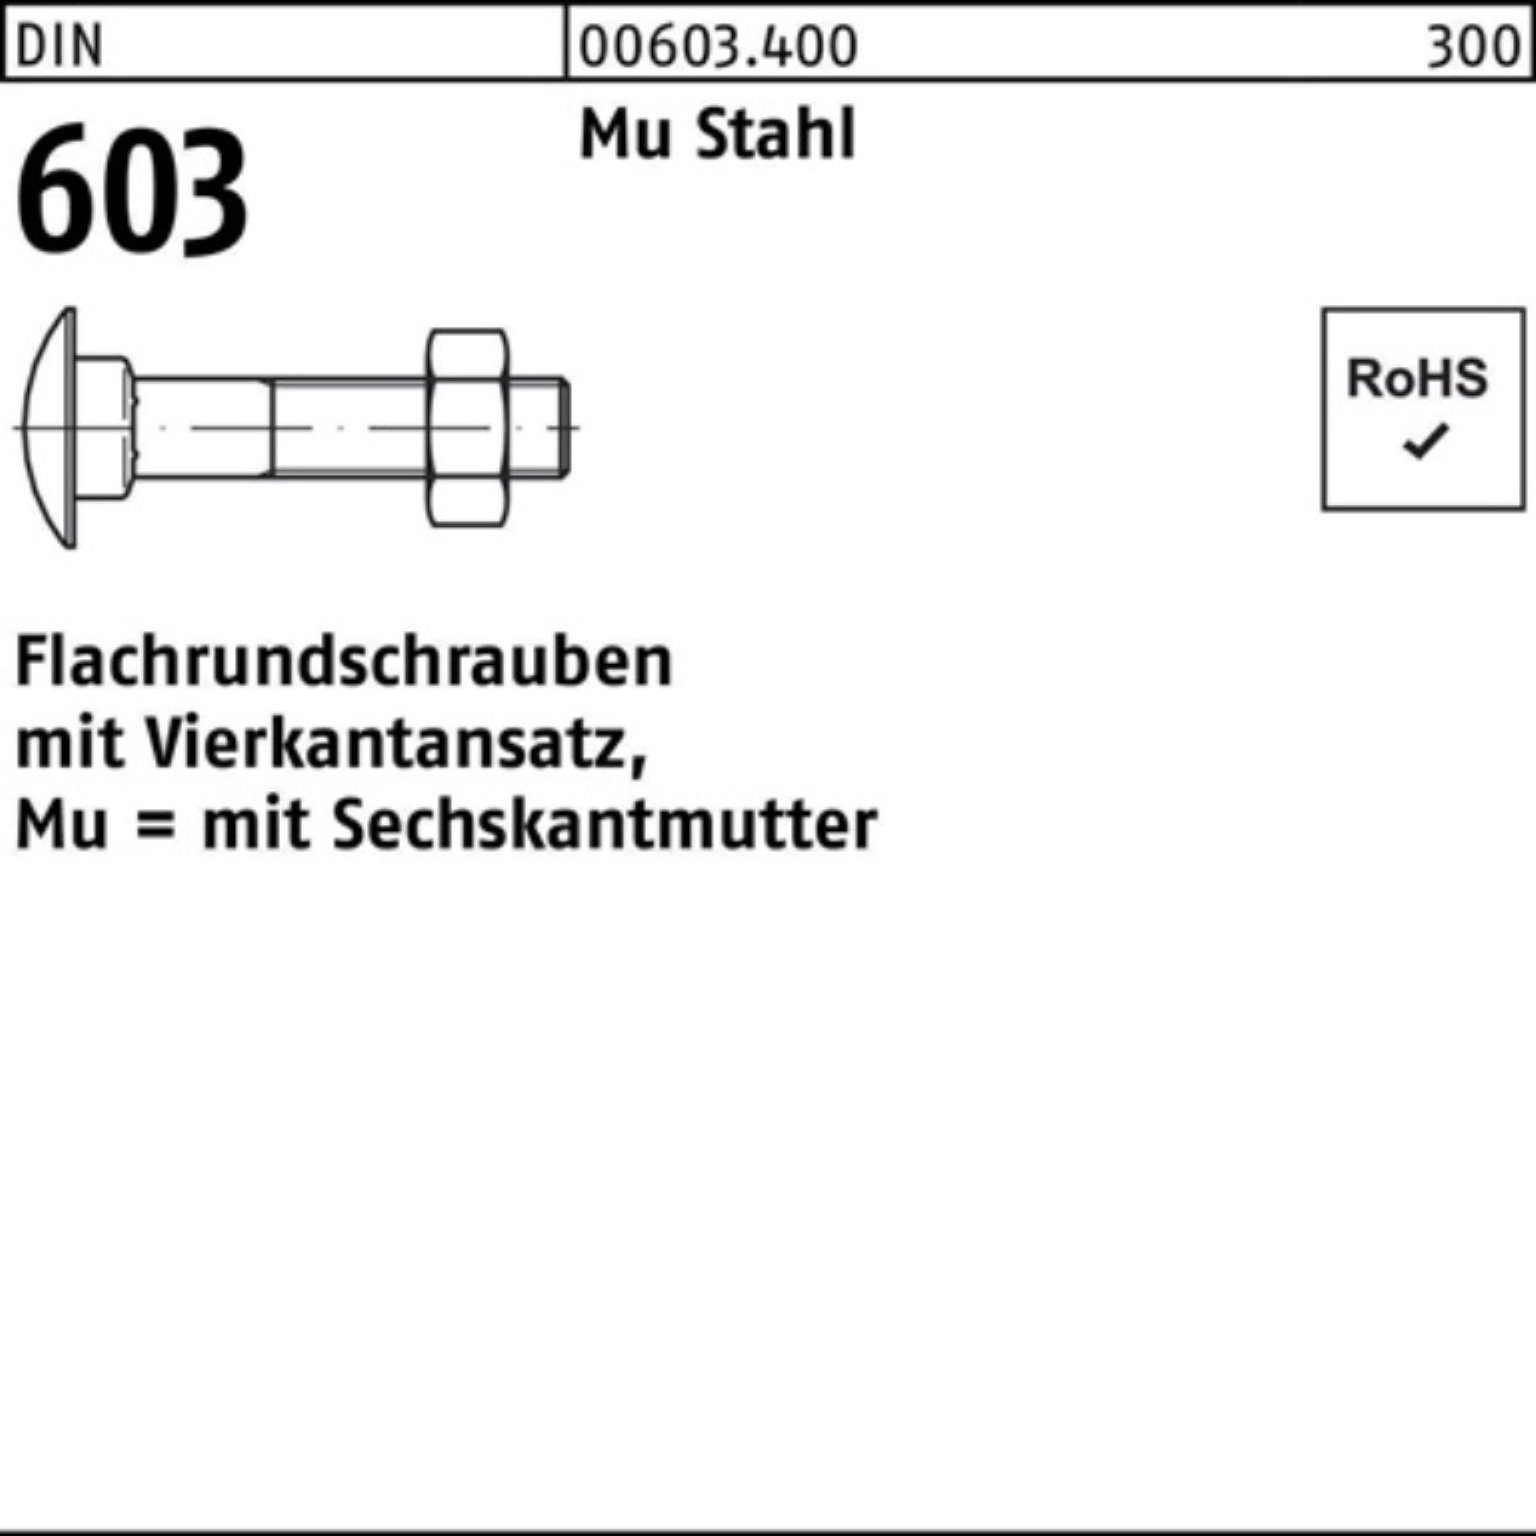 603 M12x380 Flachrundschraube Pack 100er Vierkantansatz/6-ktmutter Schraube Reyher DIN